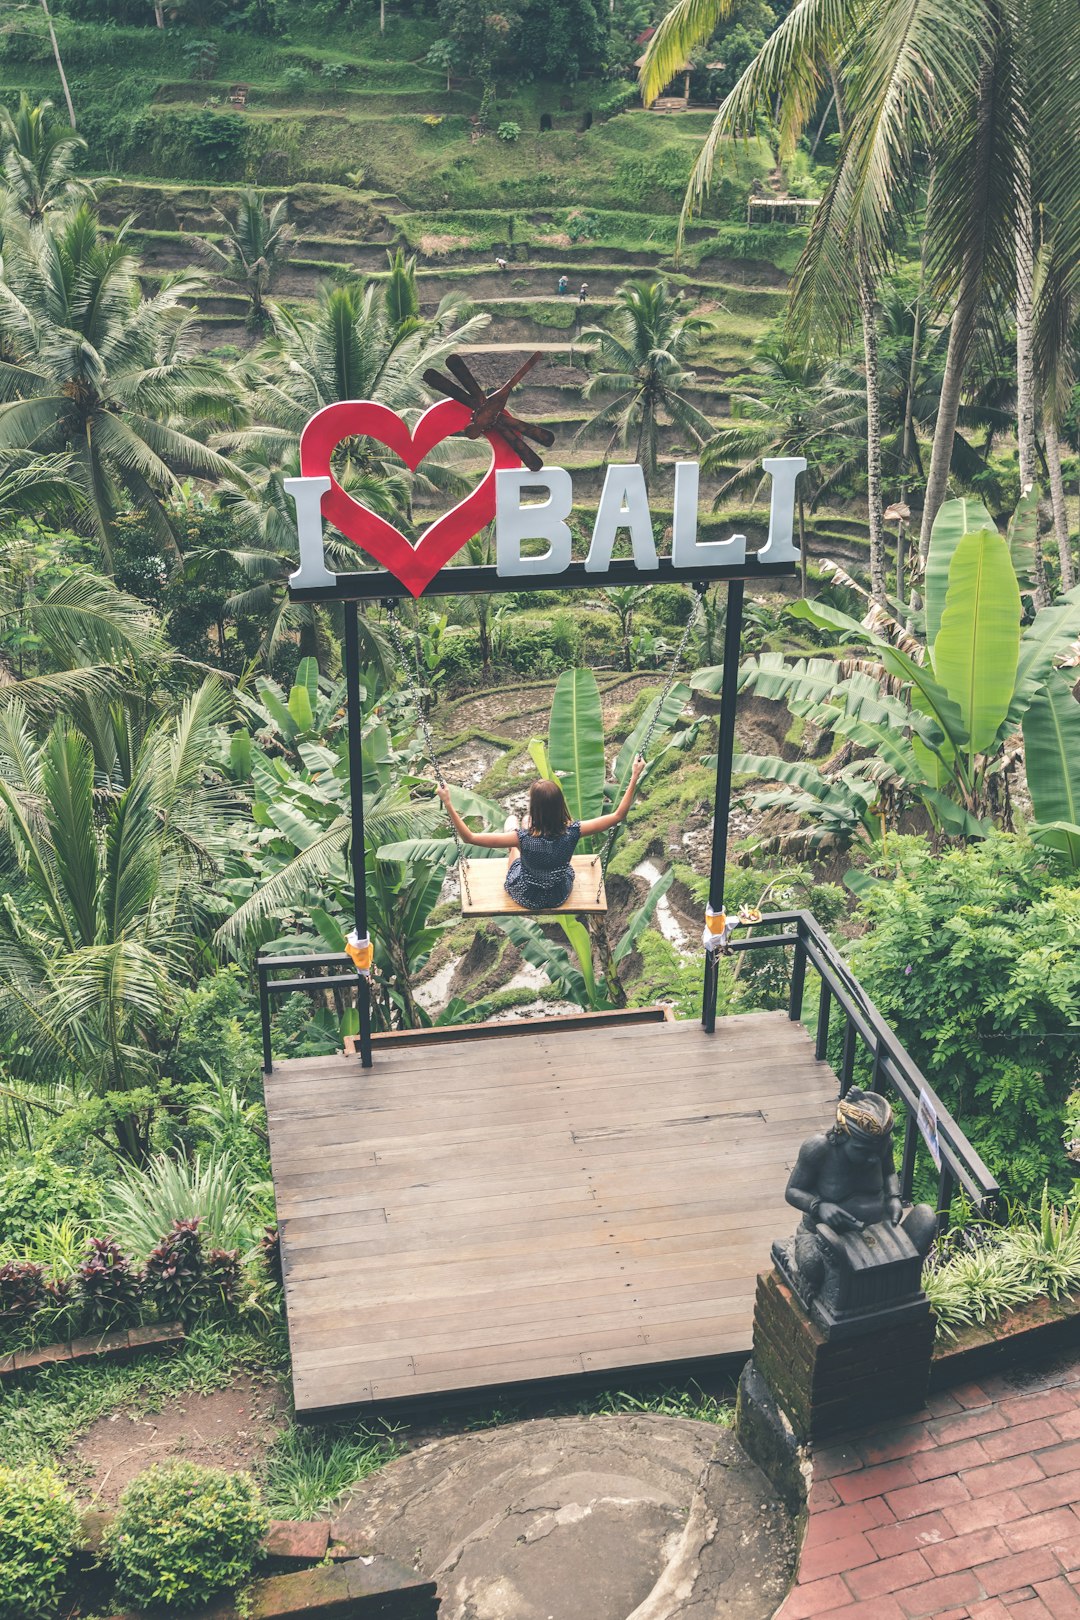 Rainforest photo spot Bali Indonesia